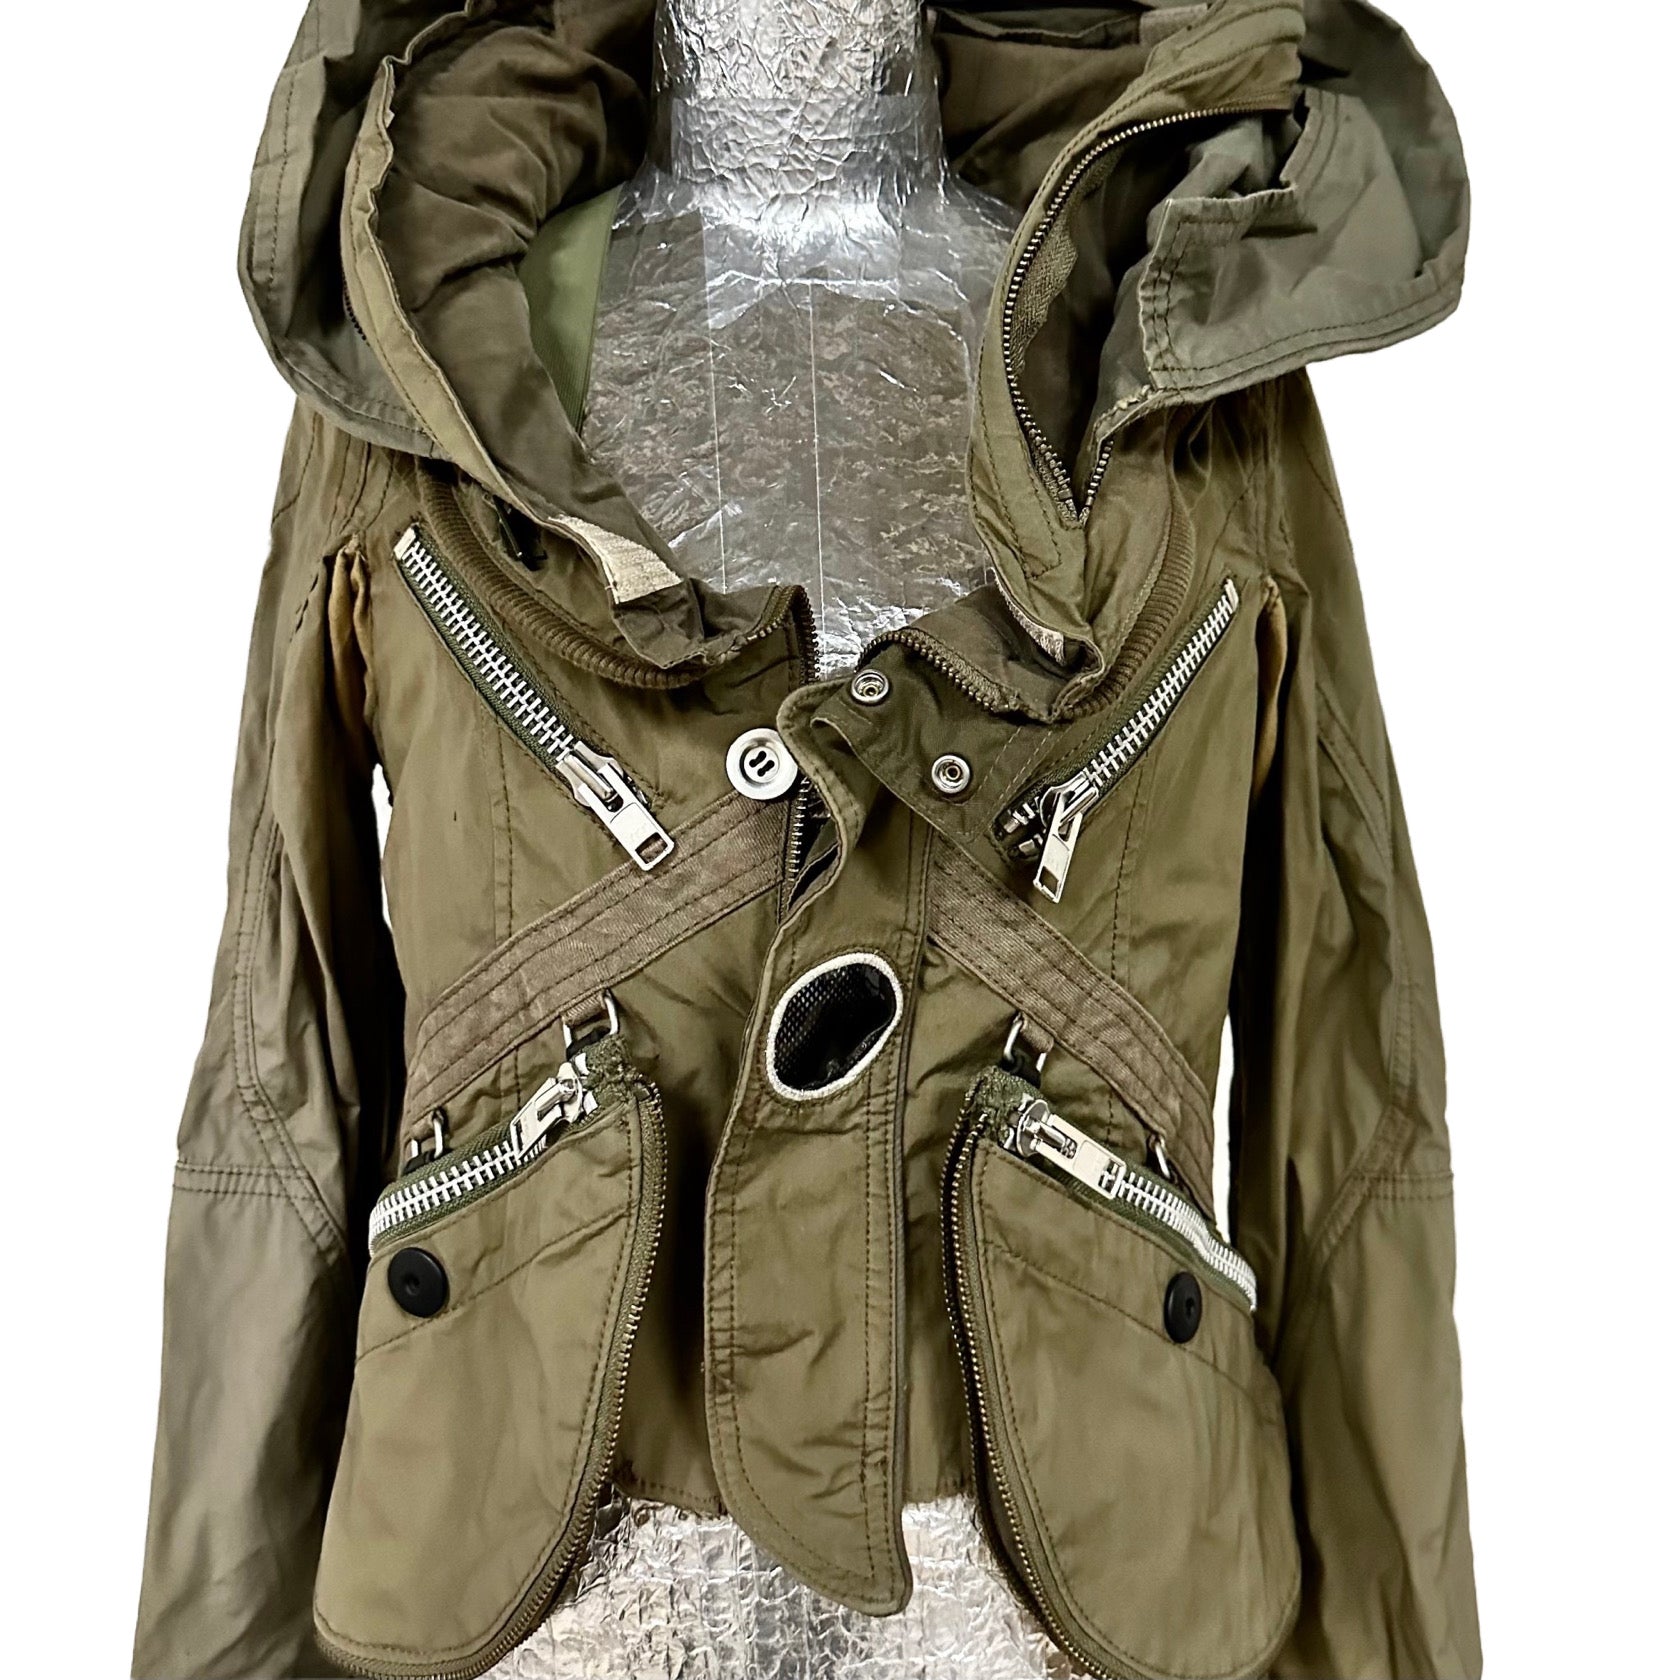 LGB BONO4 nylon jacket size2 ルグランブルーボノ-